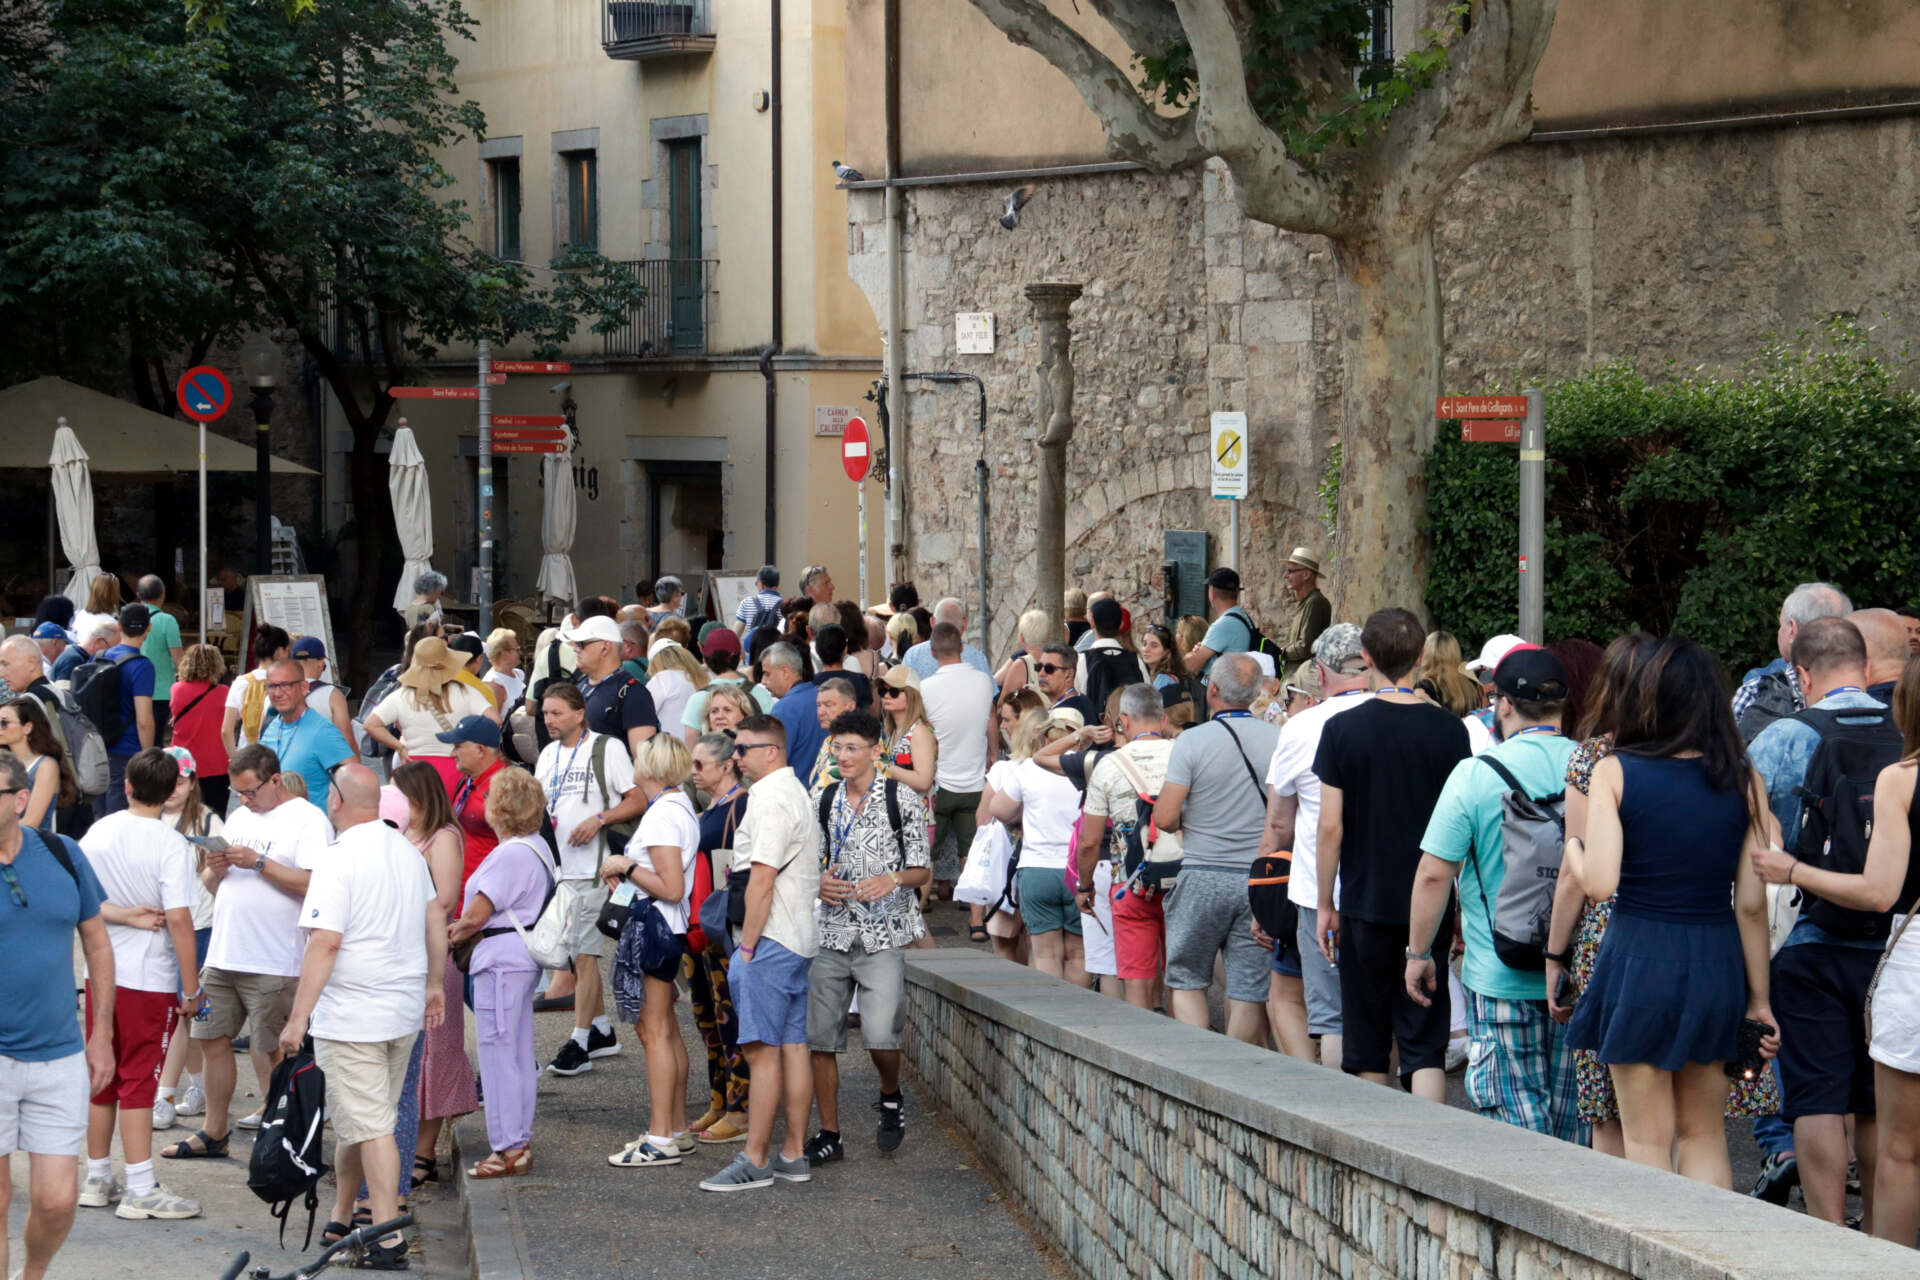 Allau de persones: Catalunya acull el triple de la seva població en turistes